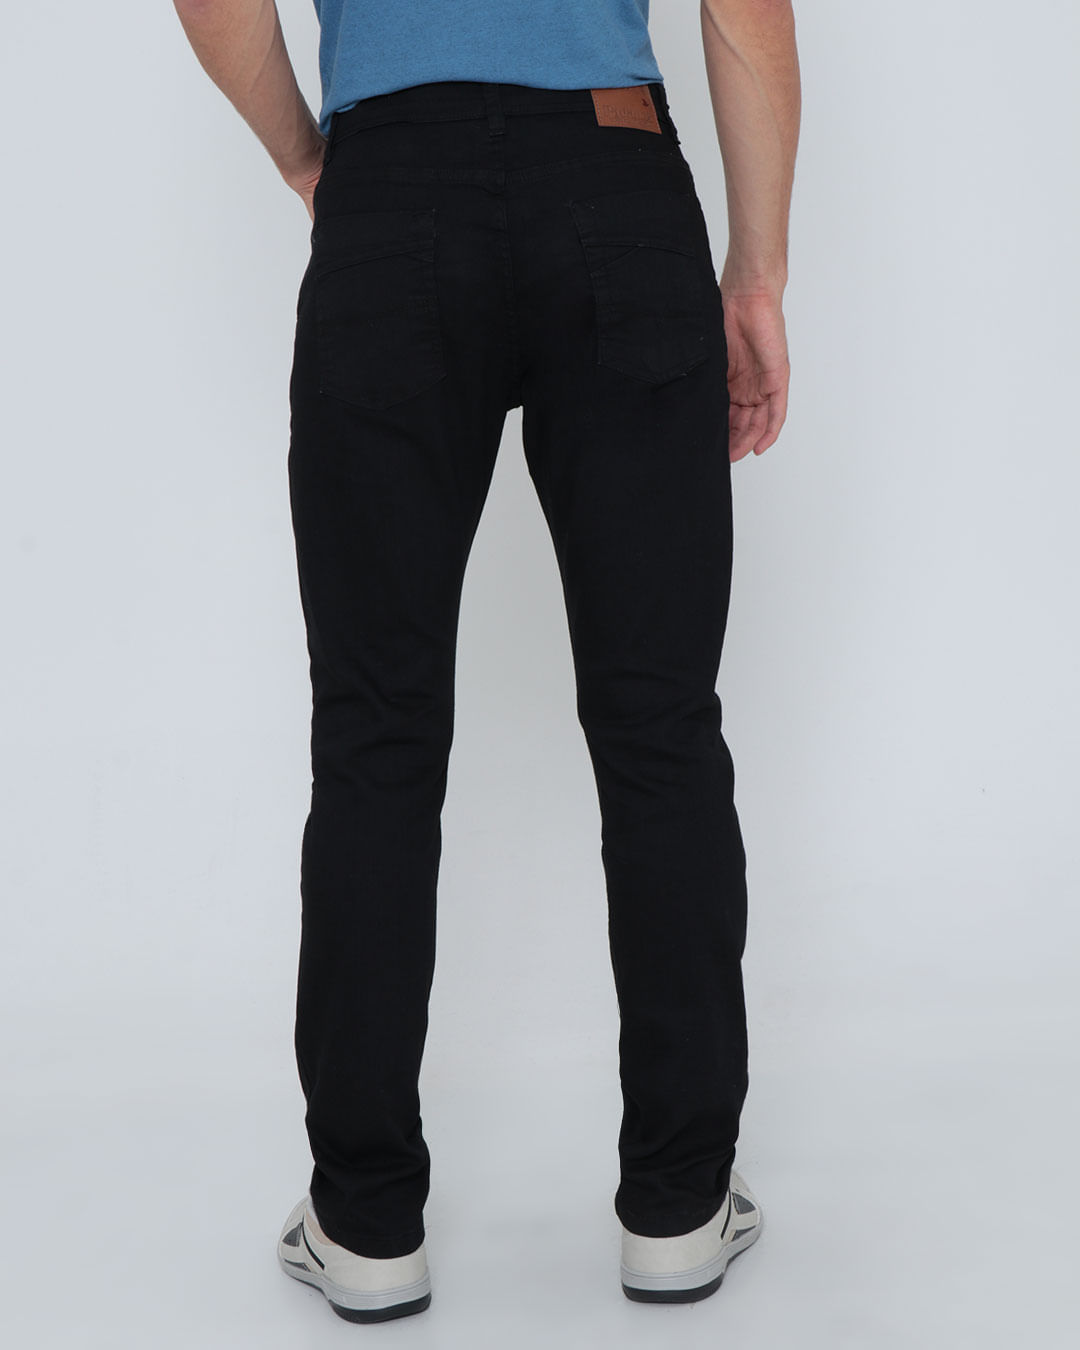 Calca-10203-Jeans-Black-Bigode-Jv---Black-Jeans-Escuro